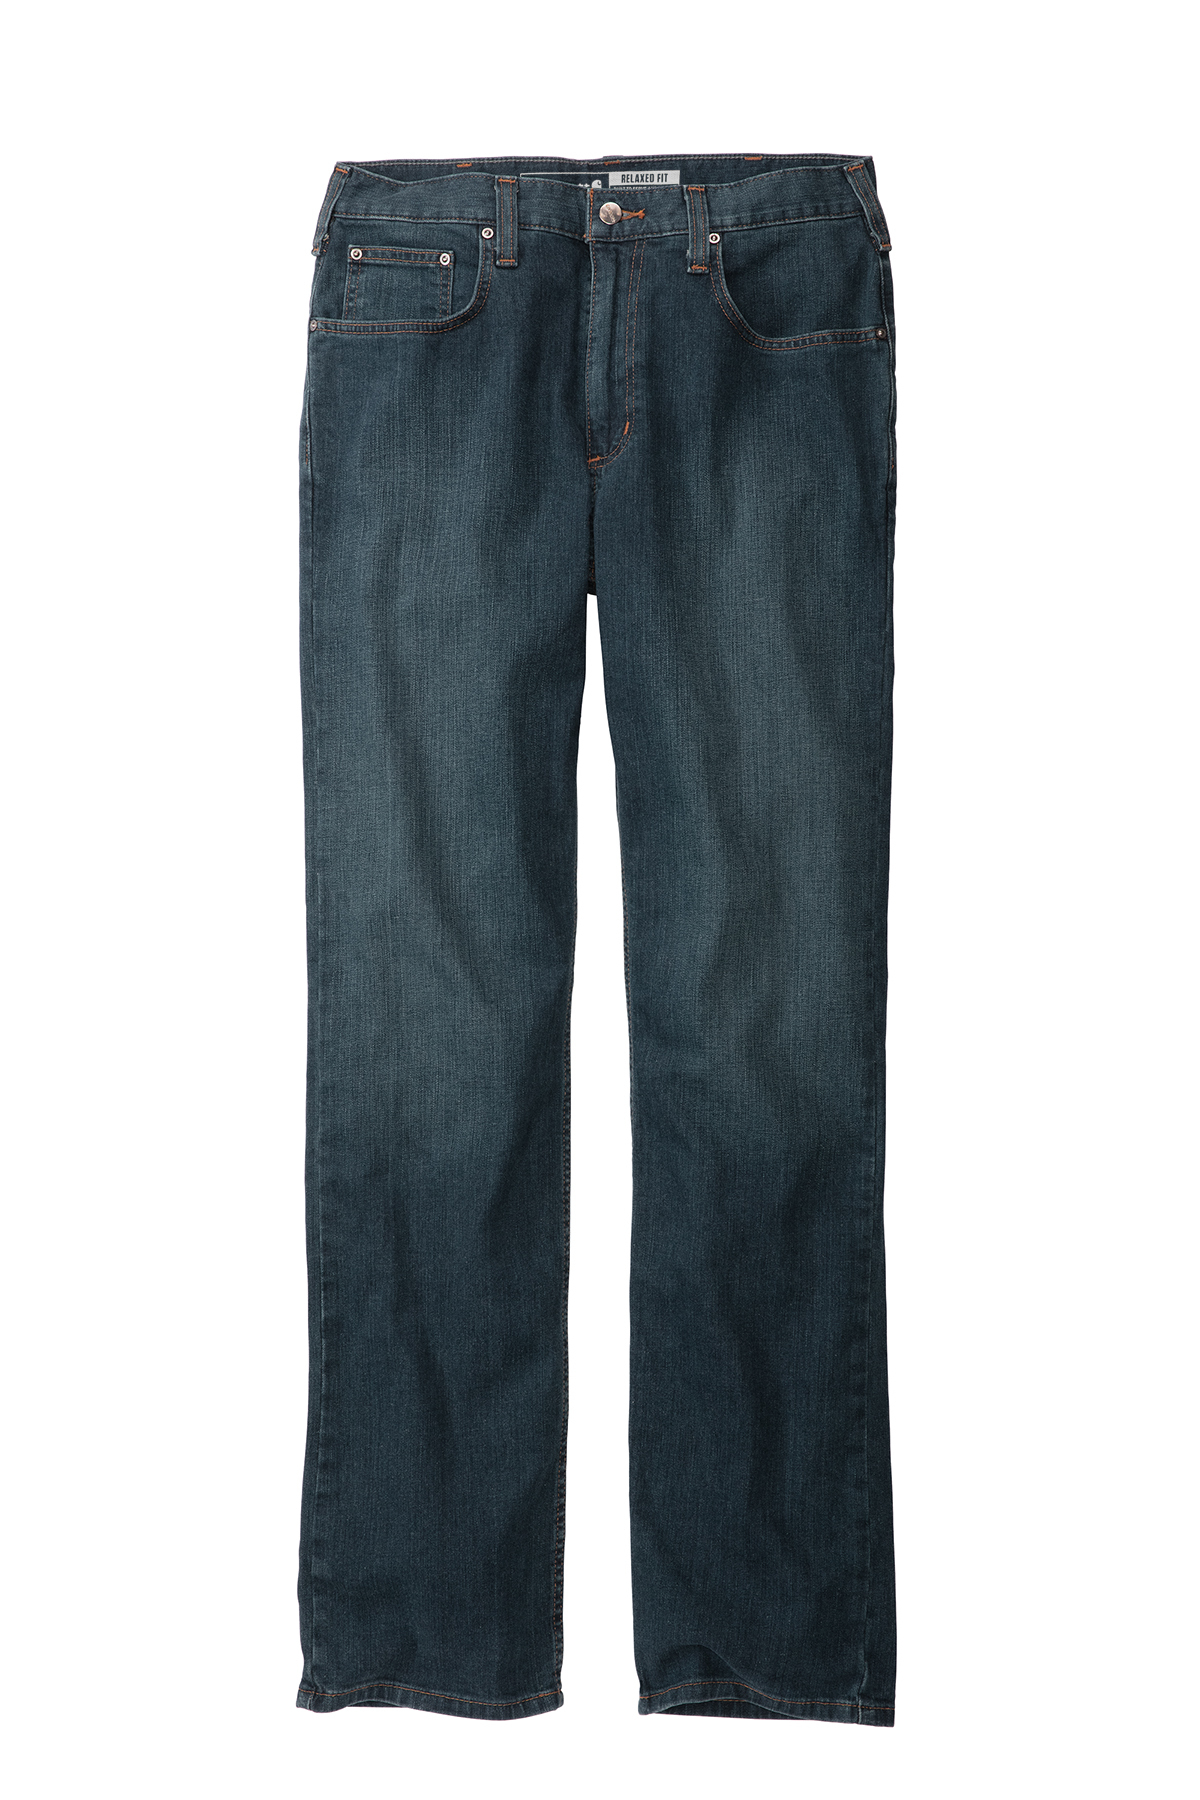 Carhartt Rugged Flex 5-Pocket Jean | Product | SanMar